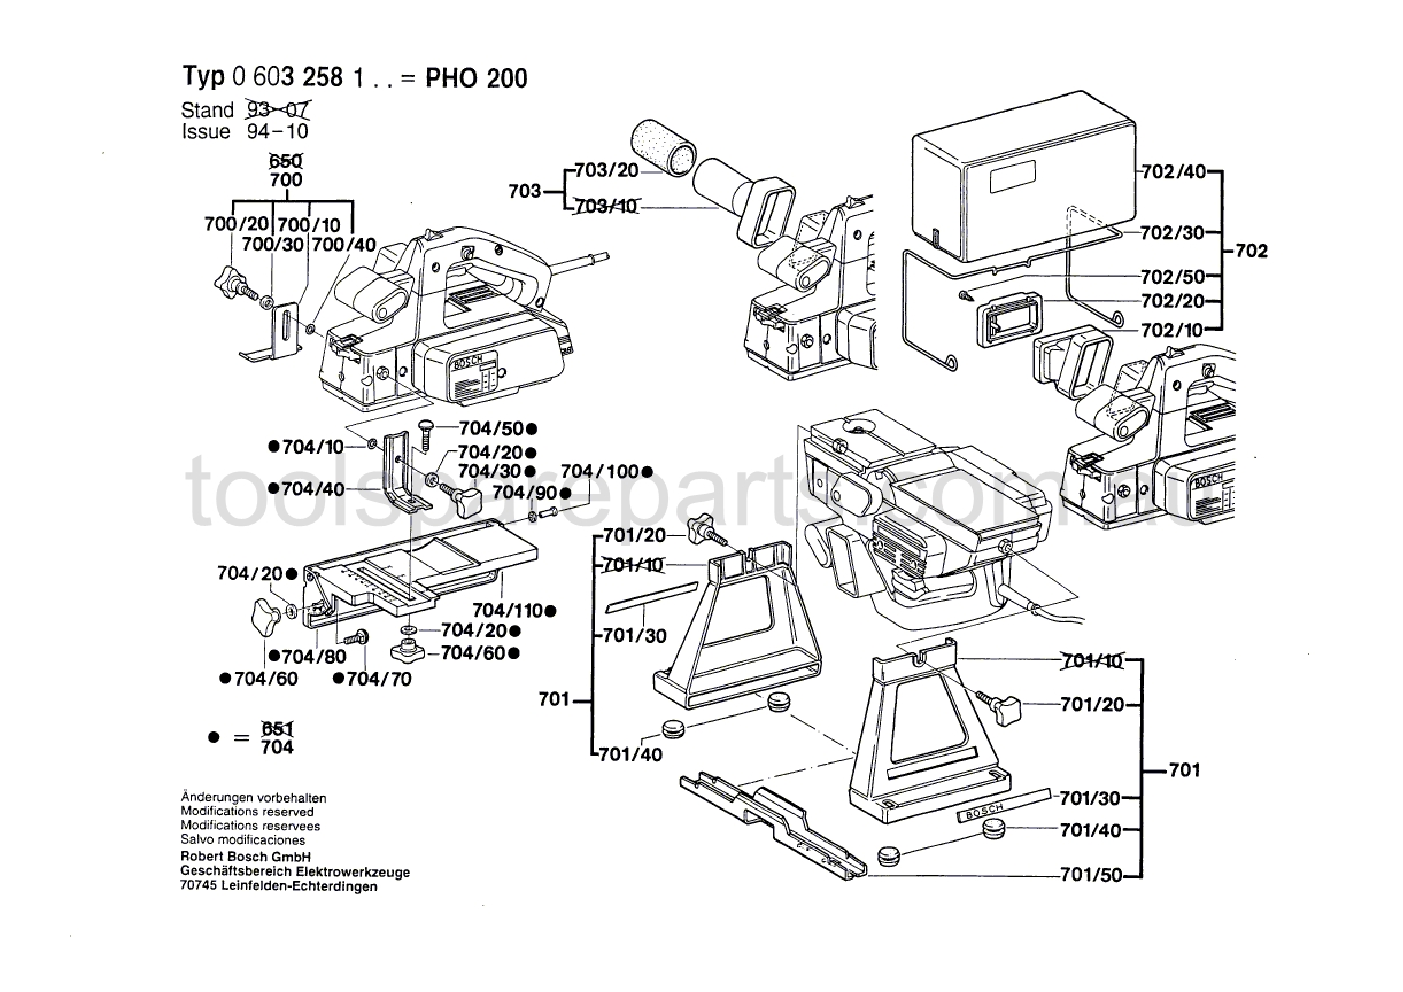 Bosch PHO 200 0603258137  Diagram 2